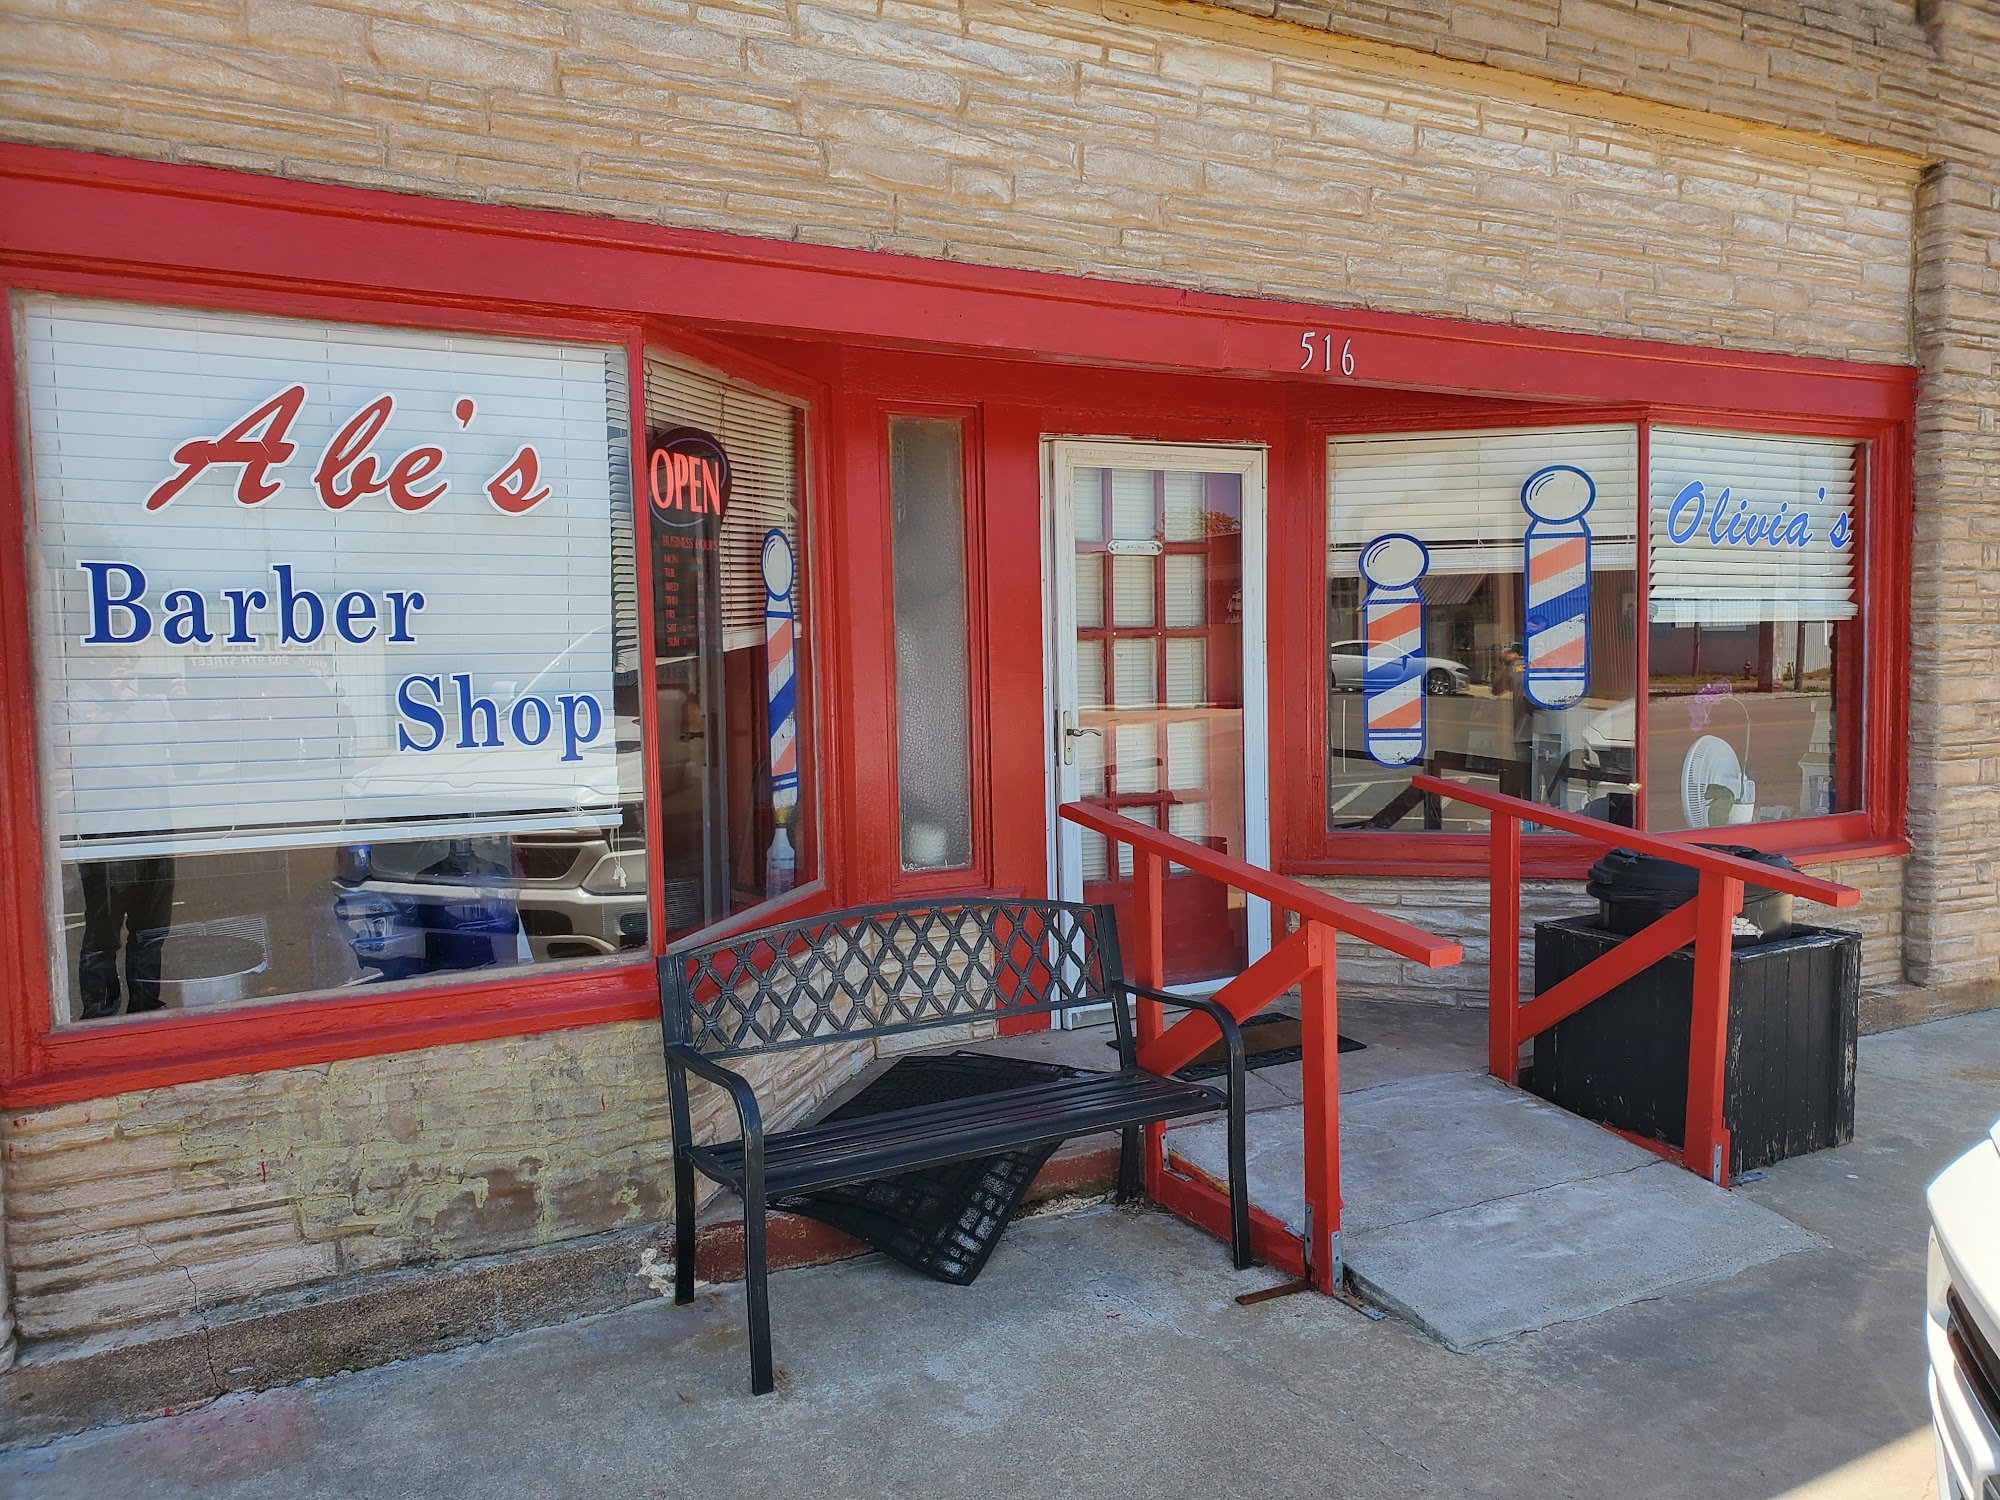 Abe's Barber Shop 516 Cole Ave, Fletcher Oklahoma 73541